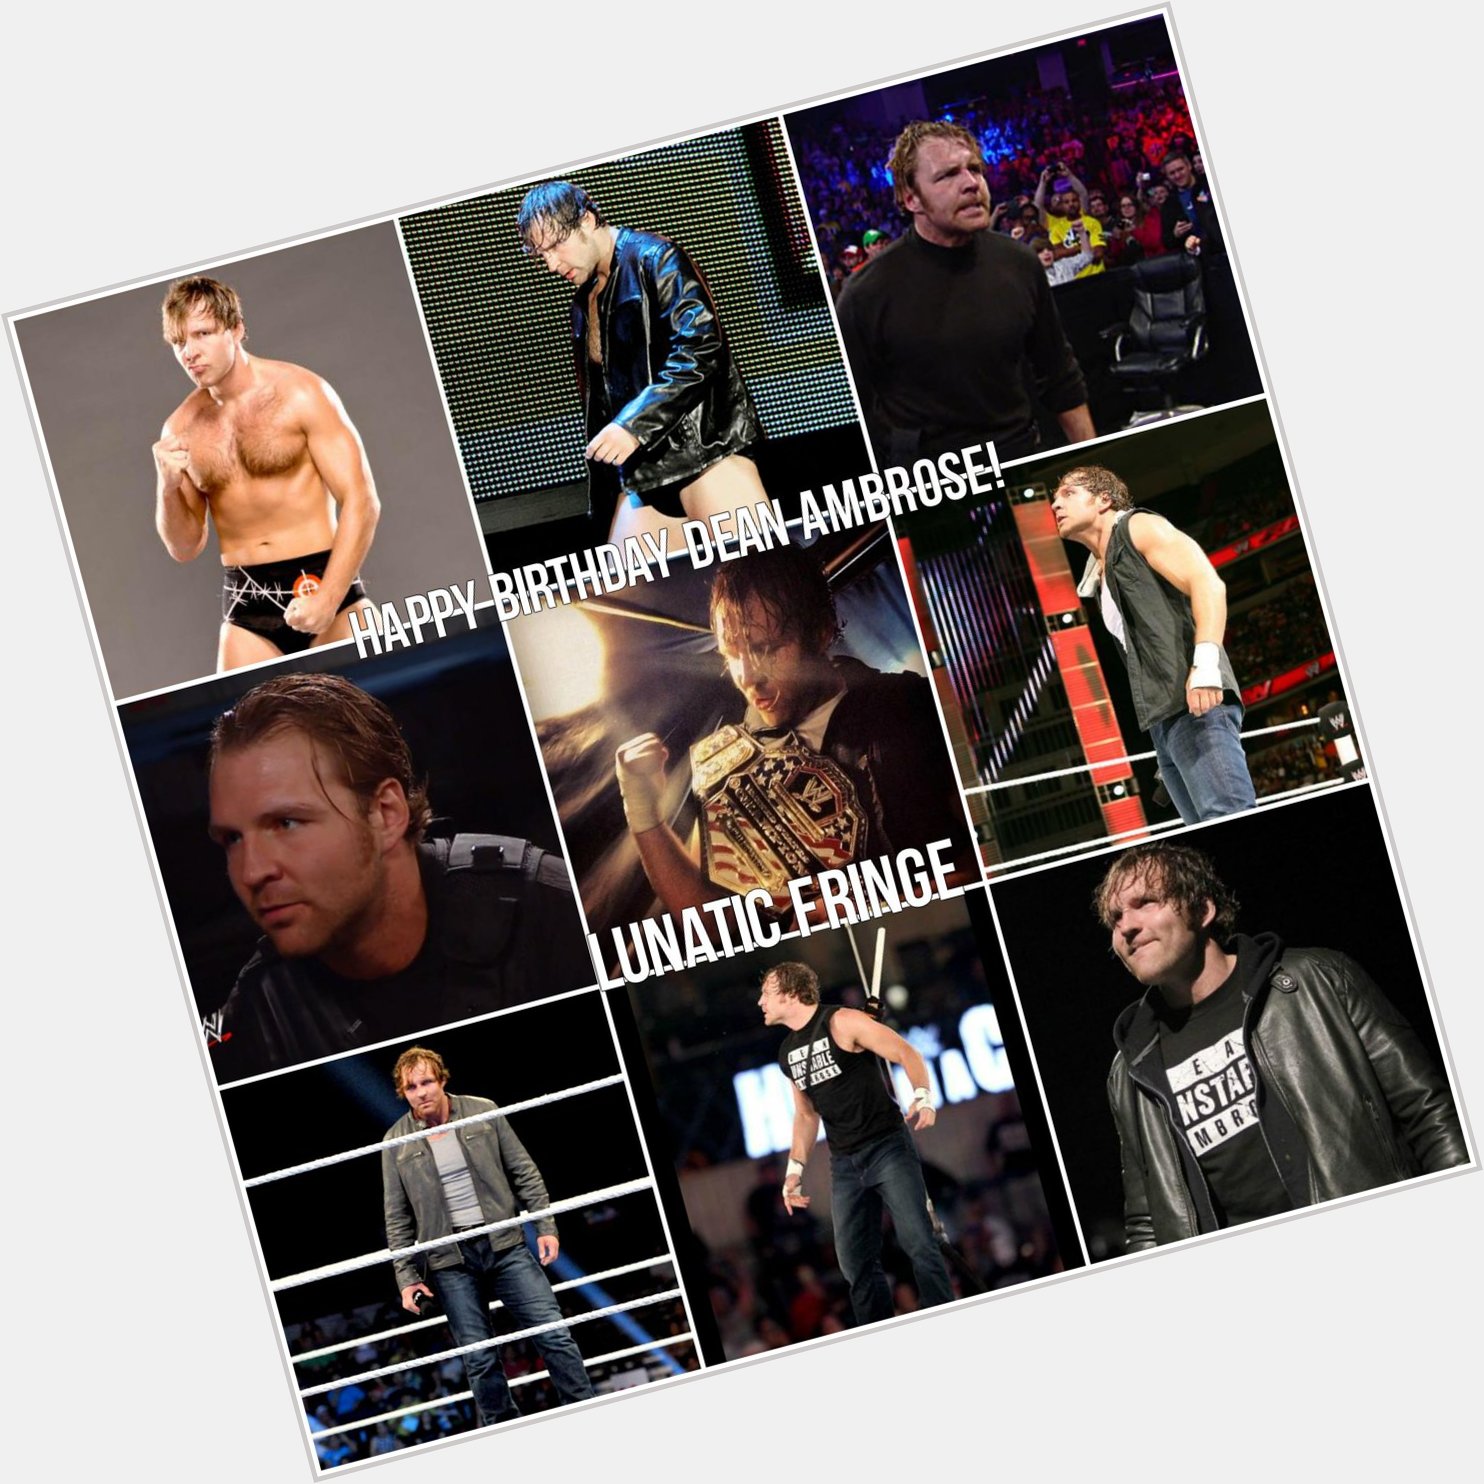 Happy Birthday Dean Ambrose!   